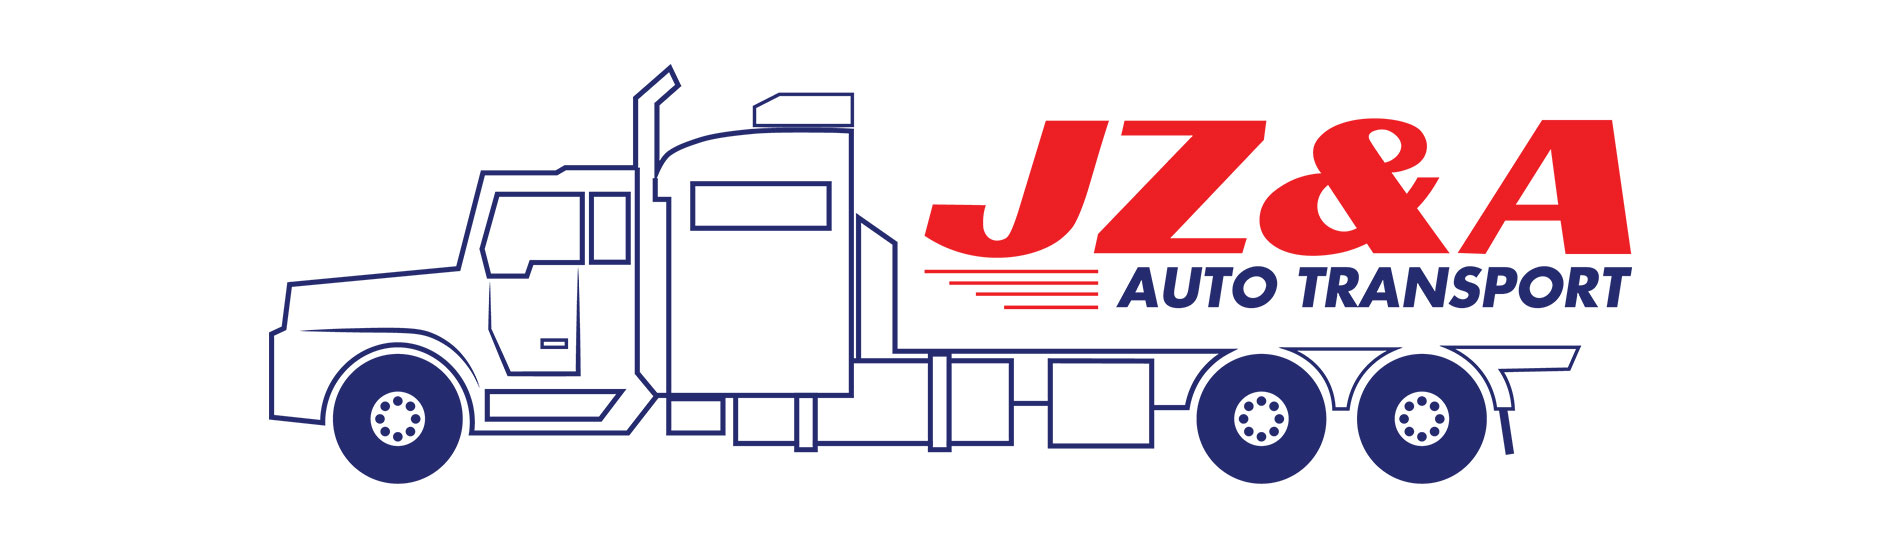 Used cars for sale in York | J Z & A Auto Sales LLC. York South Carolina